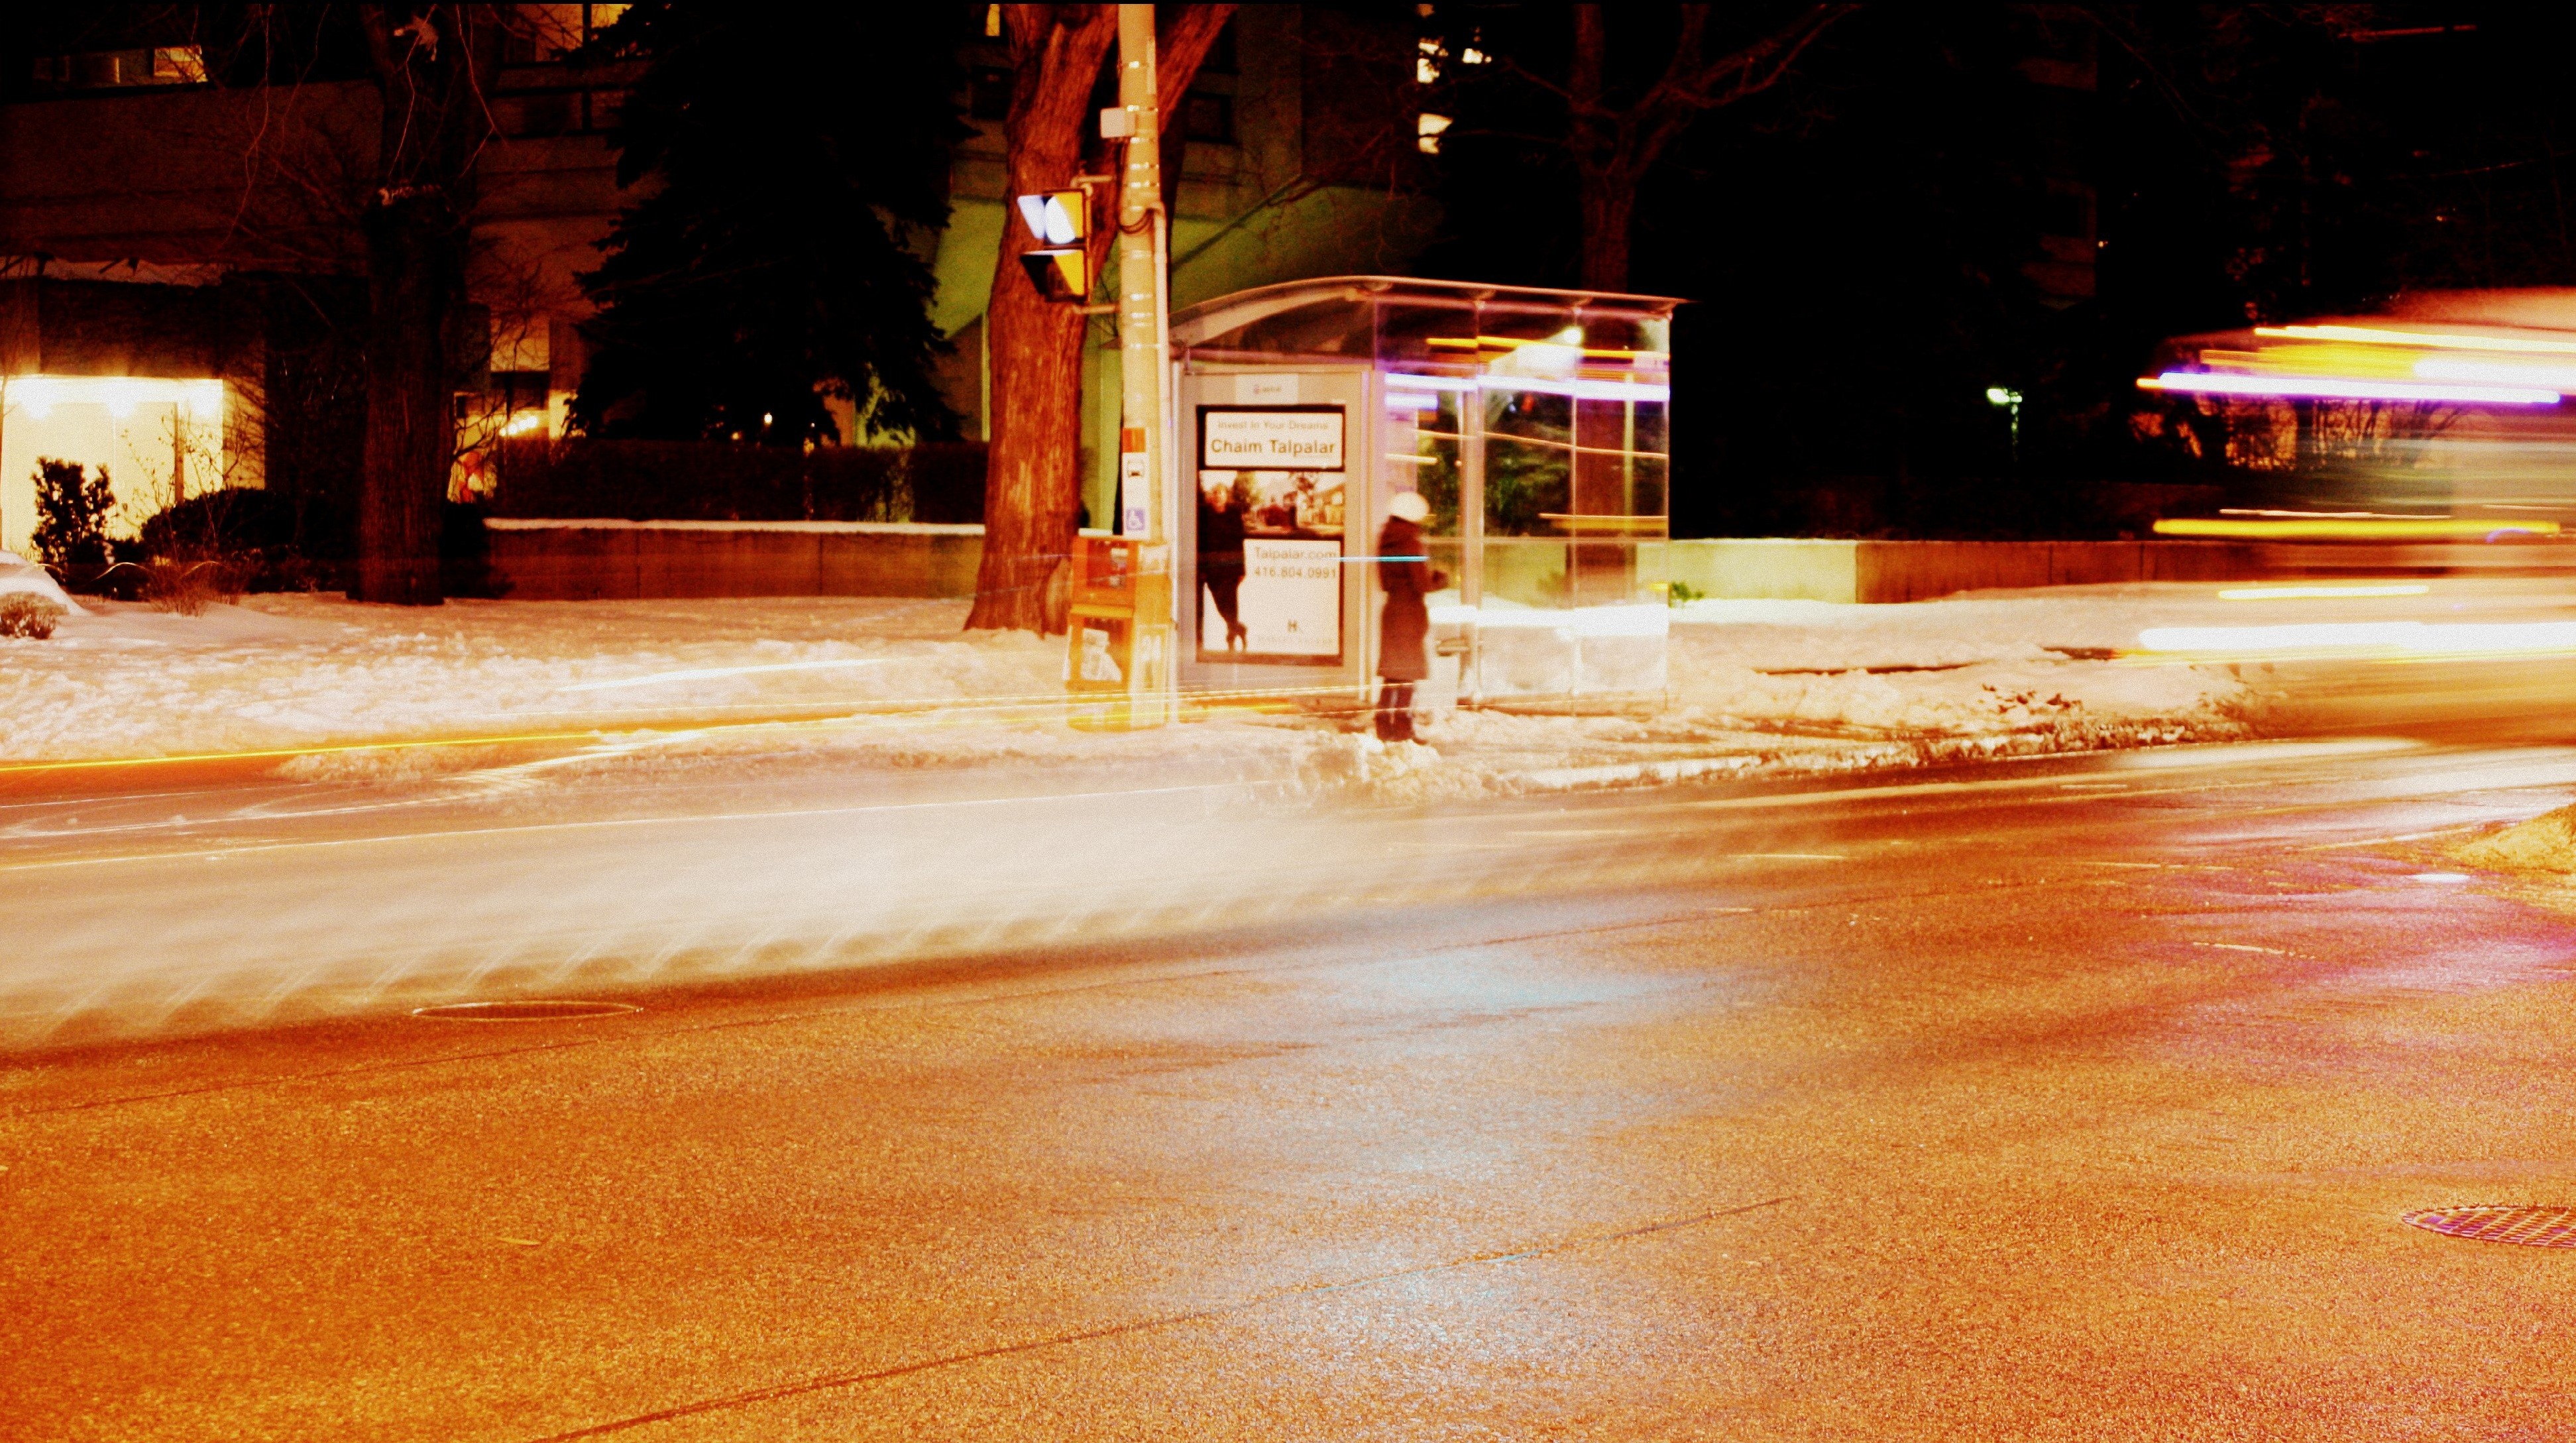 General 3887x2177 urban street city photography night bus stop orange